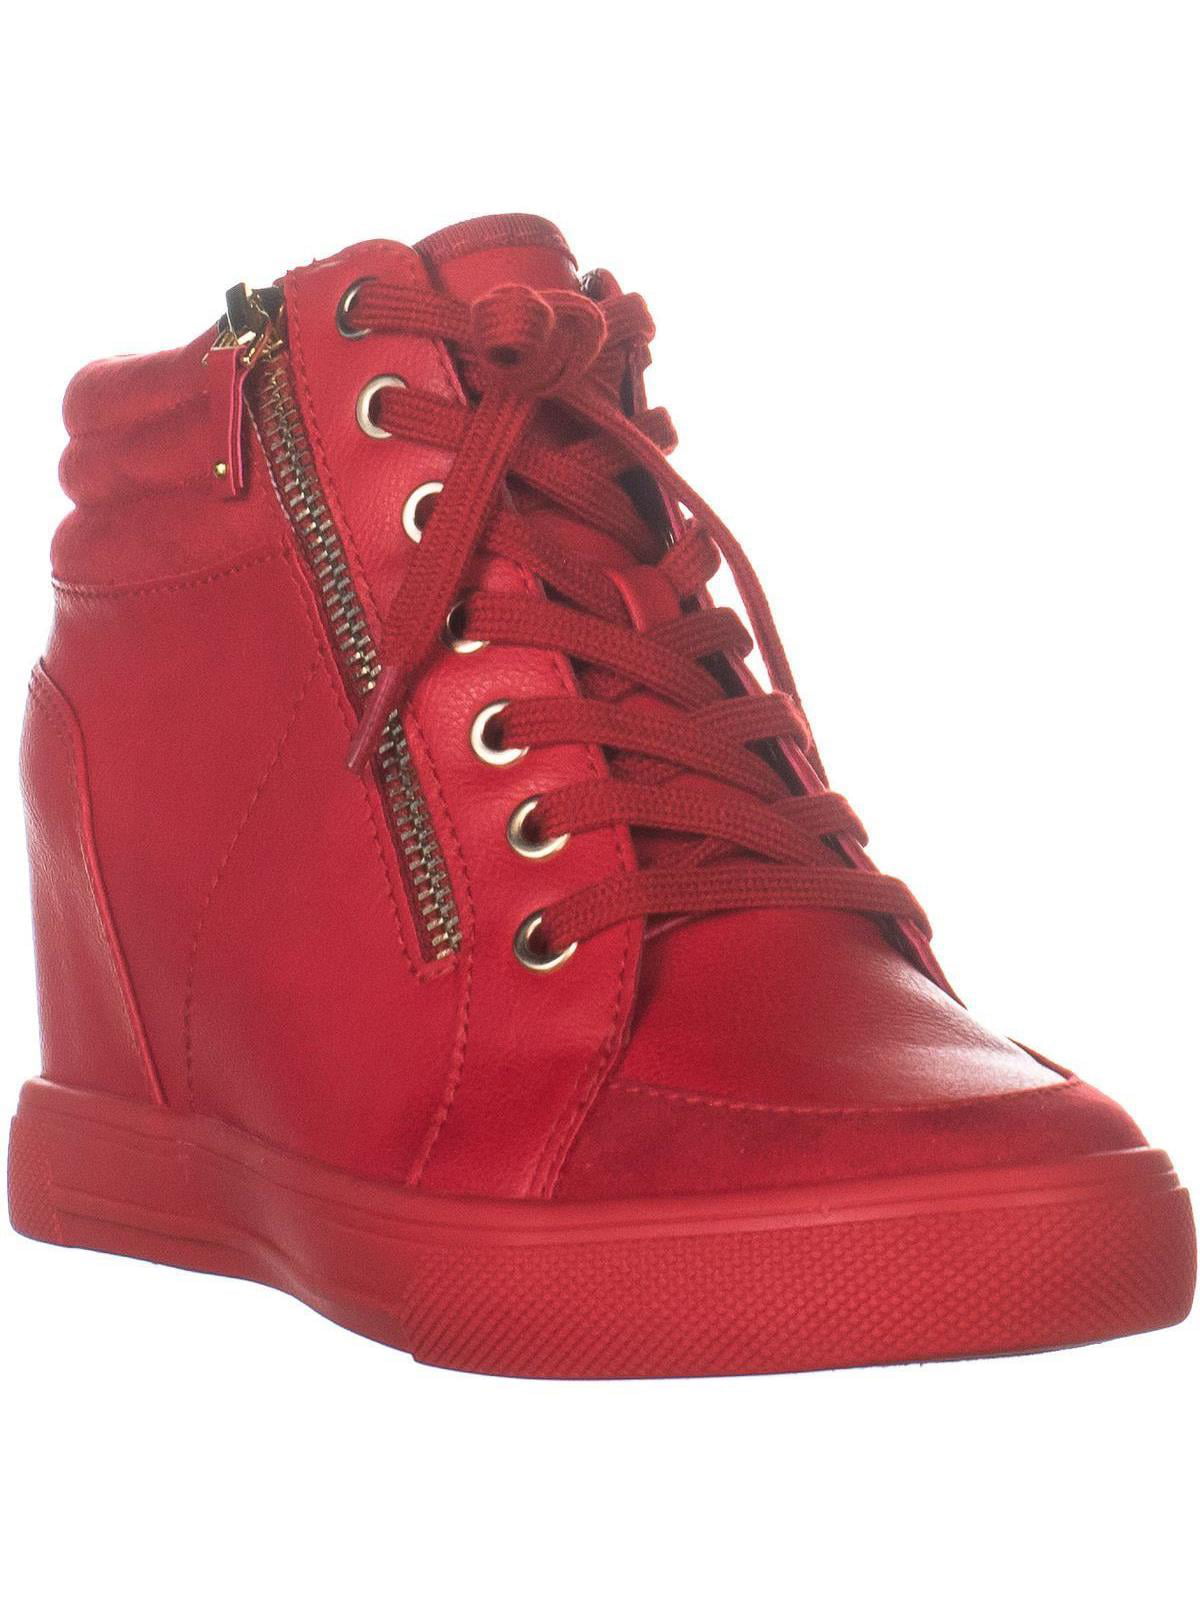 ALDO - Womens Aldo Kaia Hidden Wedge Fashion Sneakers, Red, 7 US / 37.5 ...